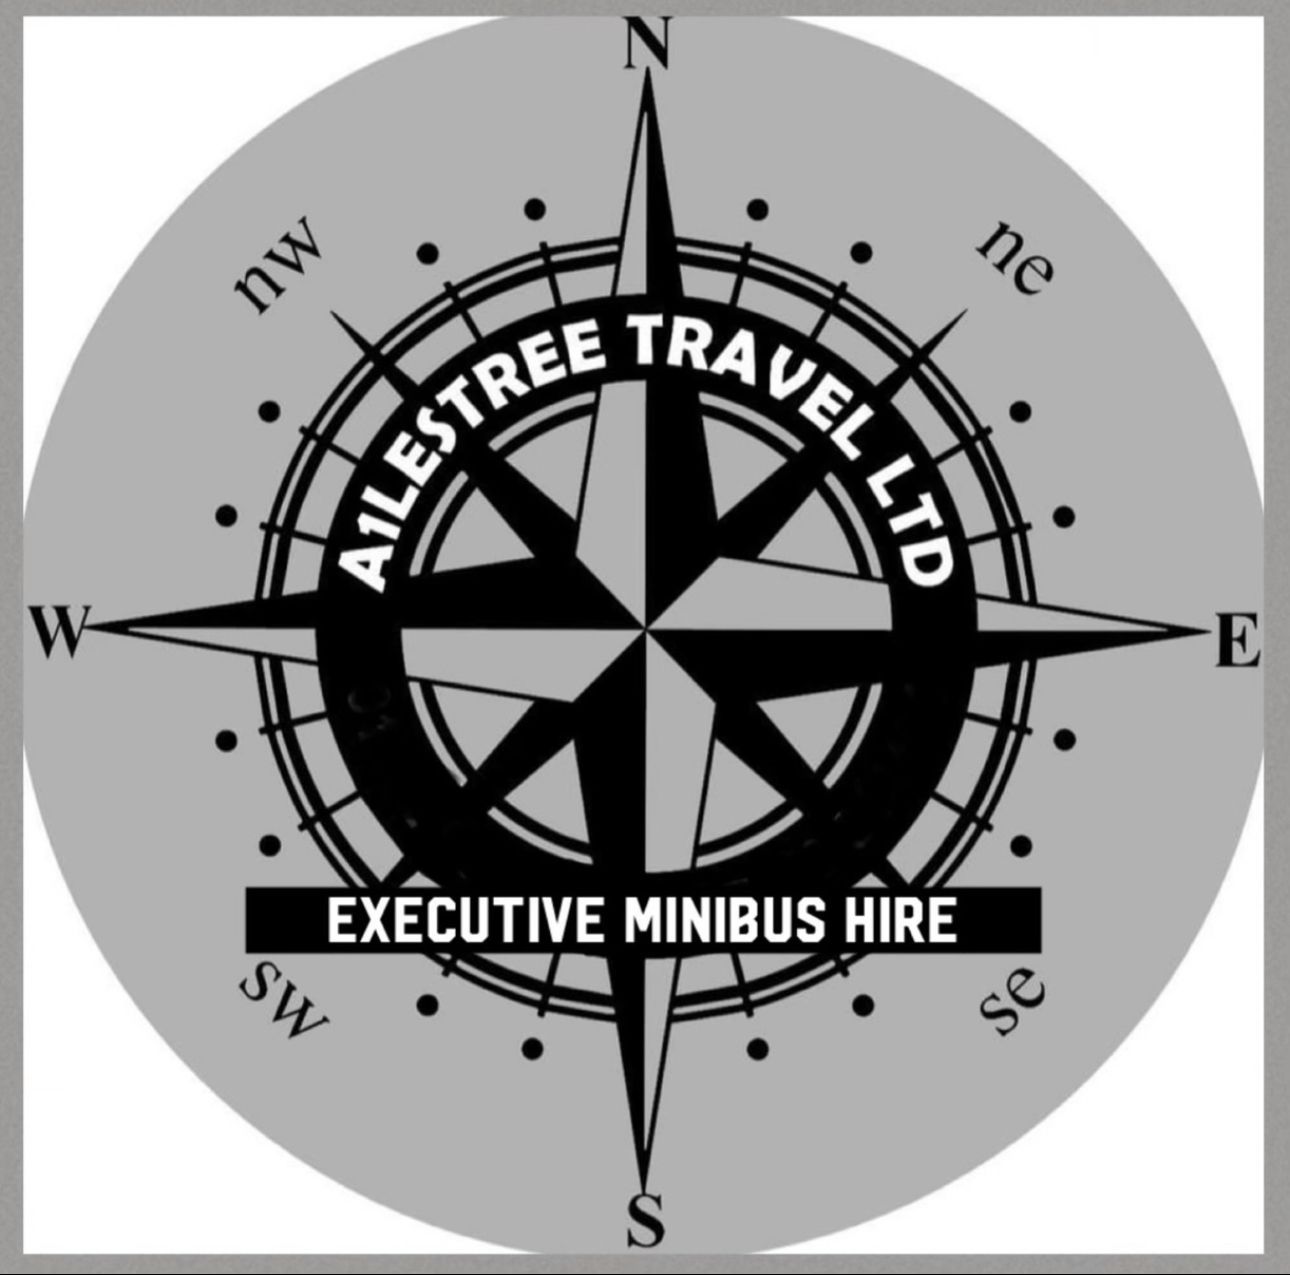 A1lestree Travel Ltd logo